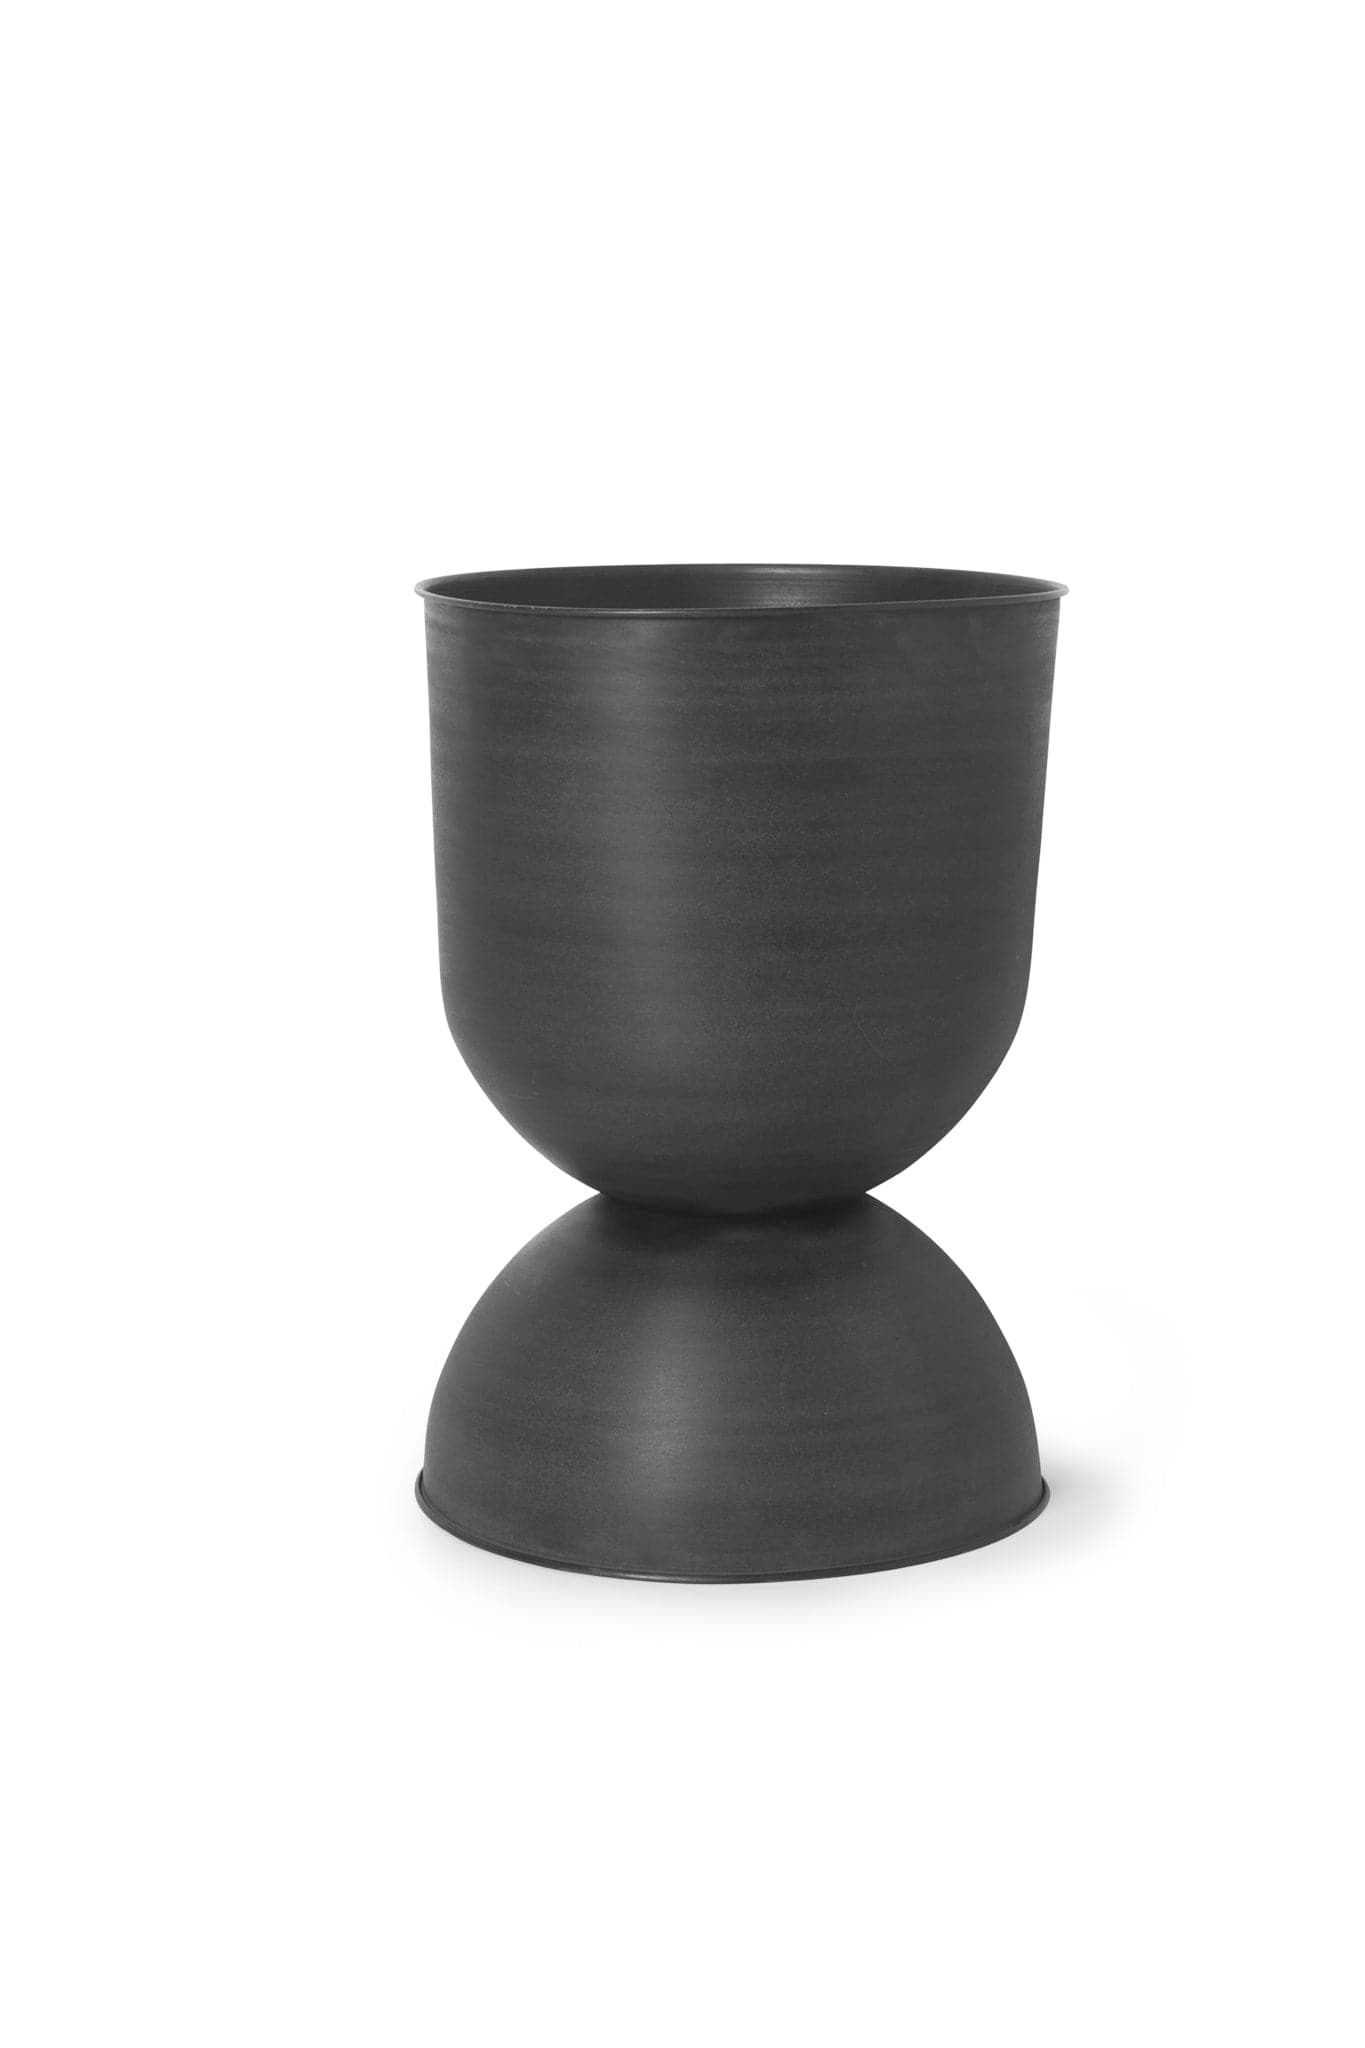 Ferm Living Hourglass Pot - Large - Marz DesignsFerm Living